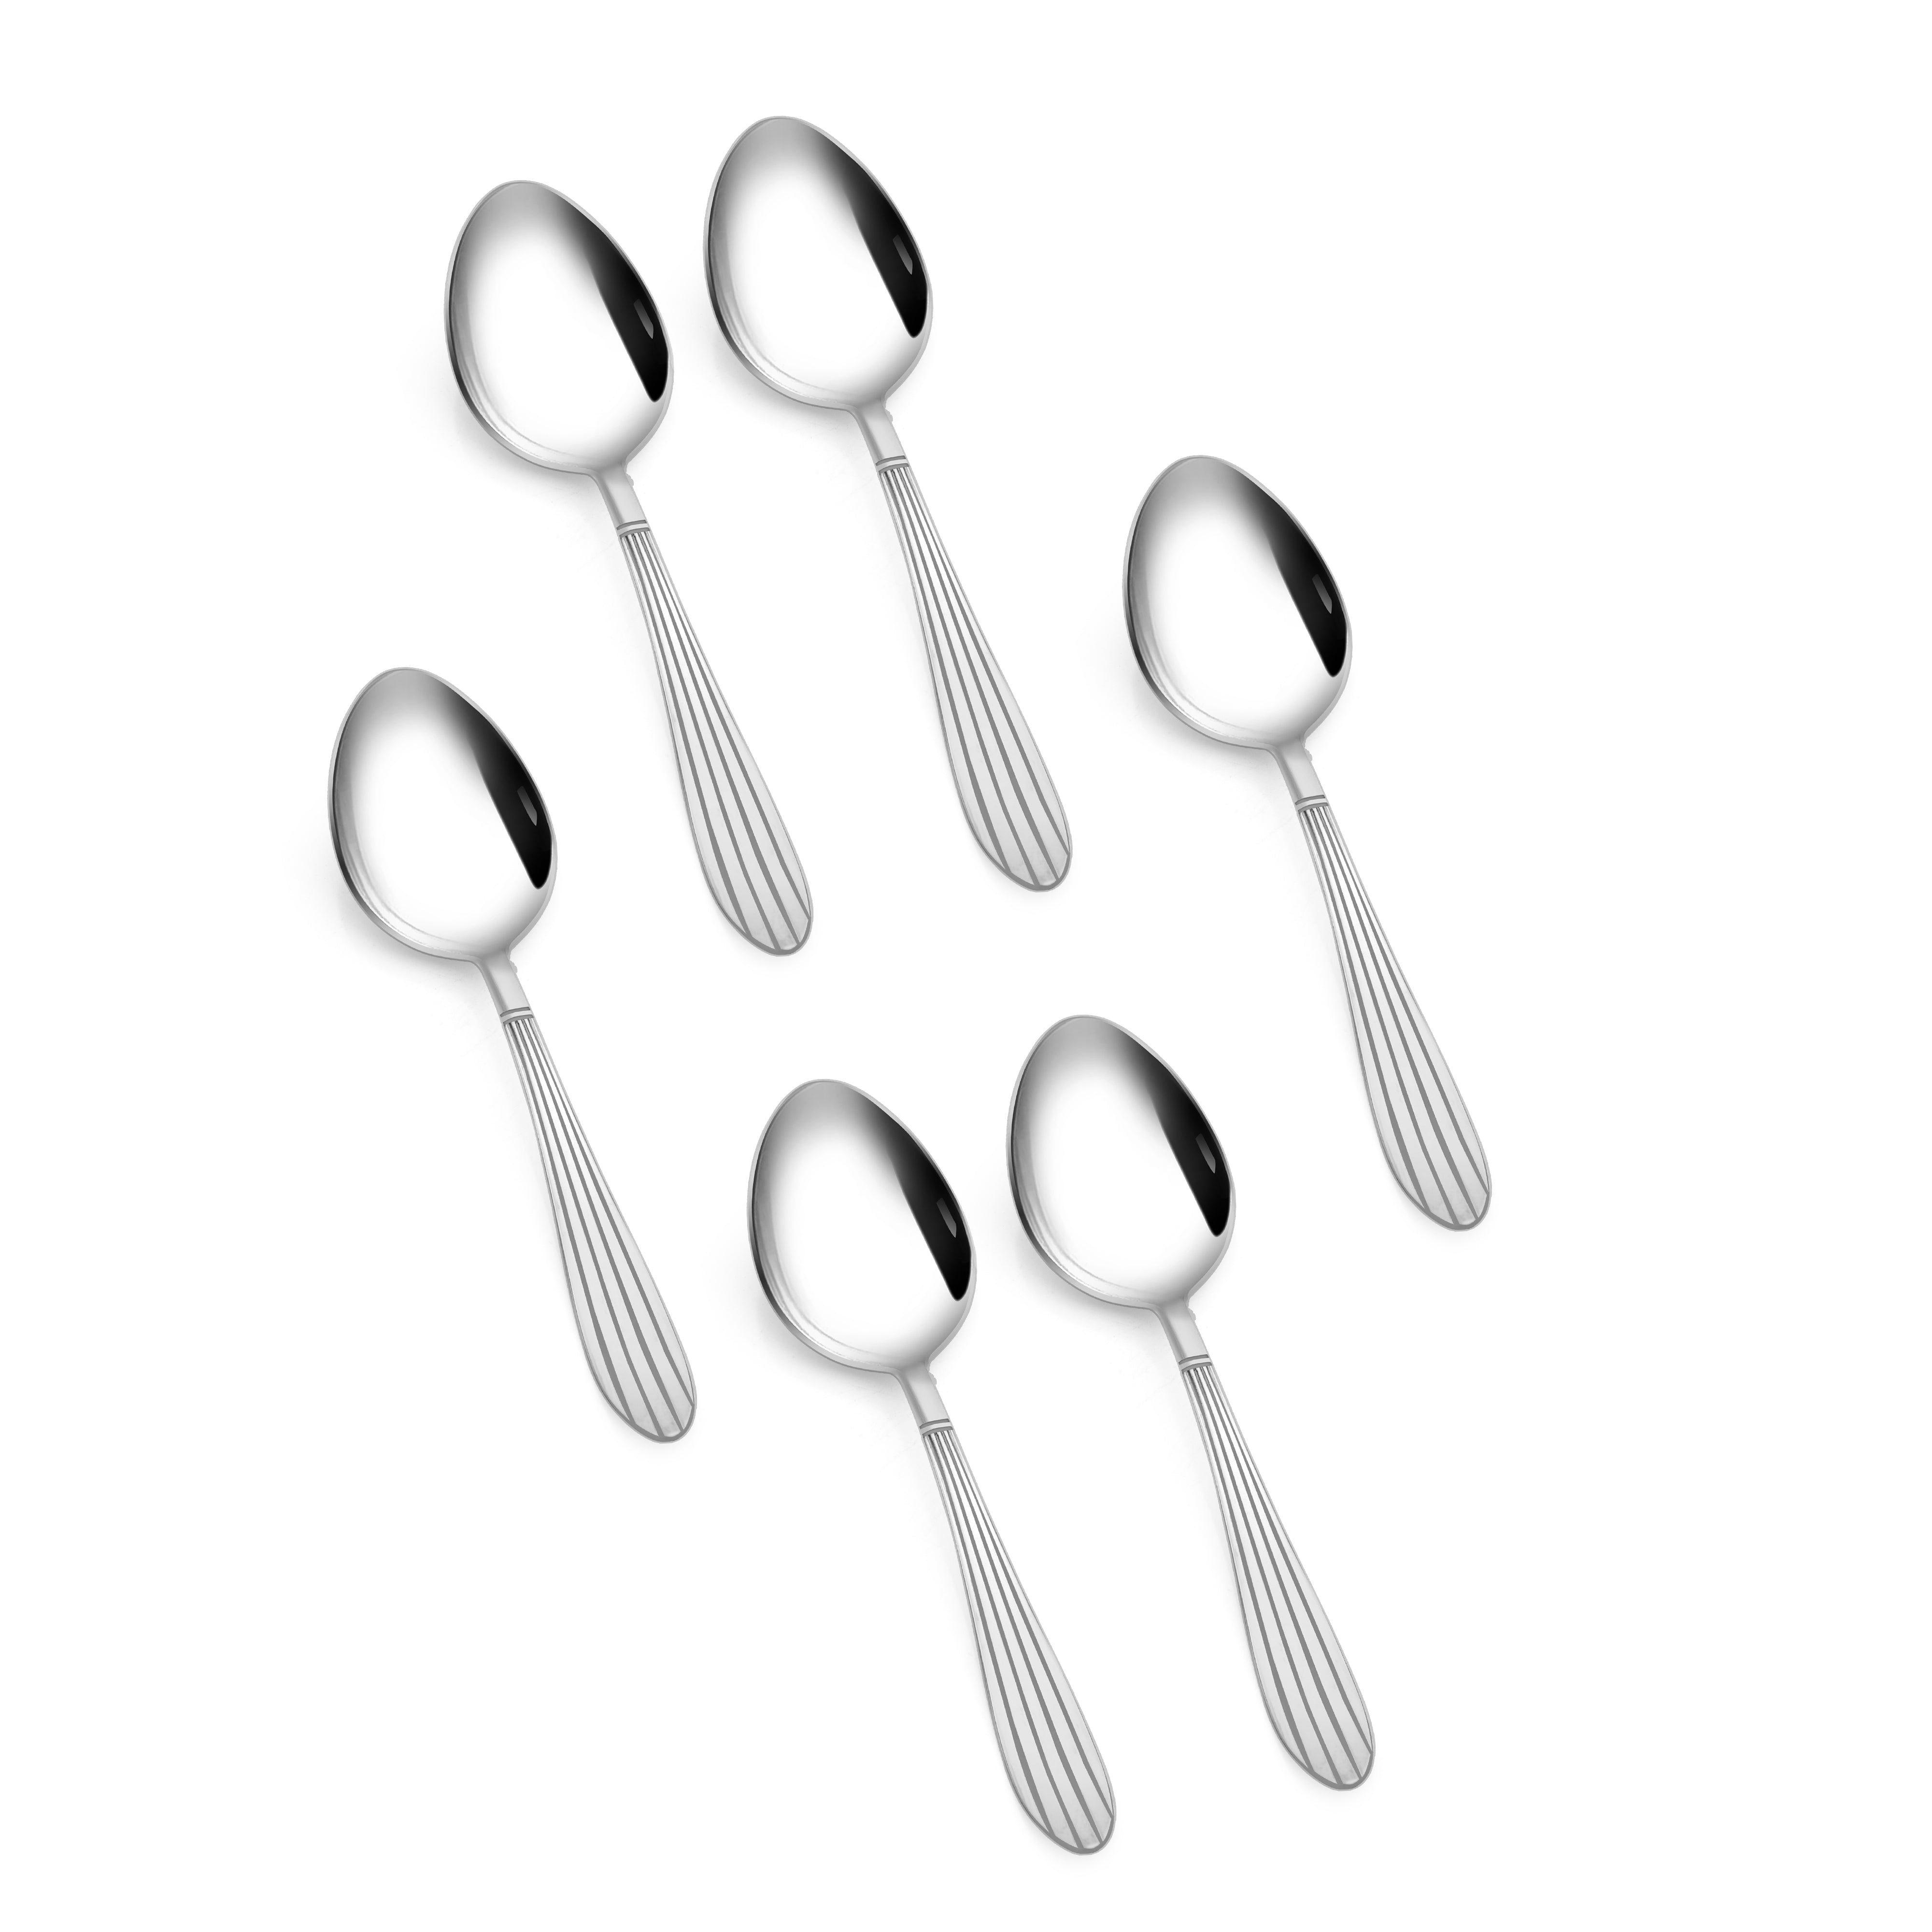 Arias Sysco Cutlery Set of 18 (Silver)